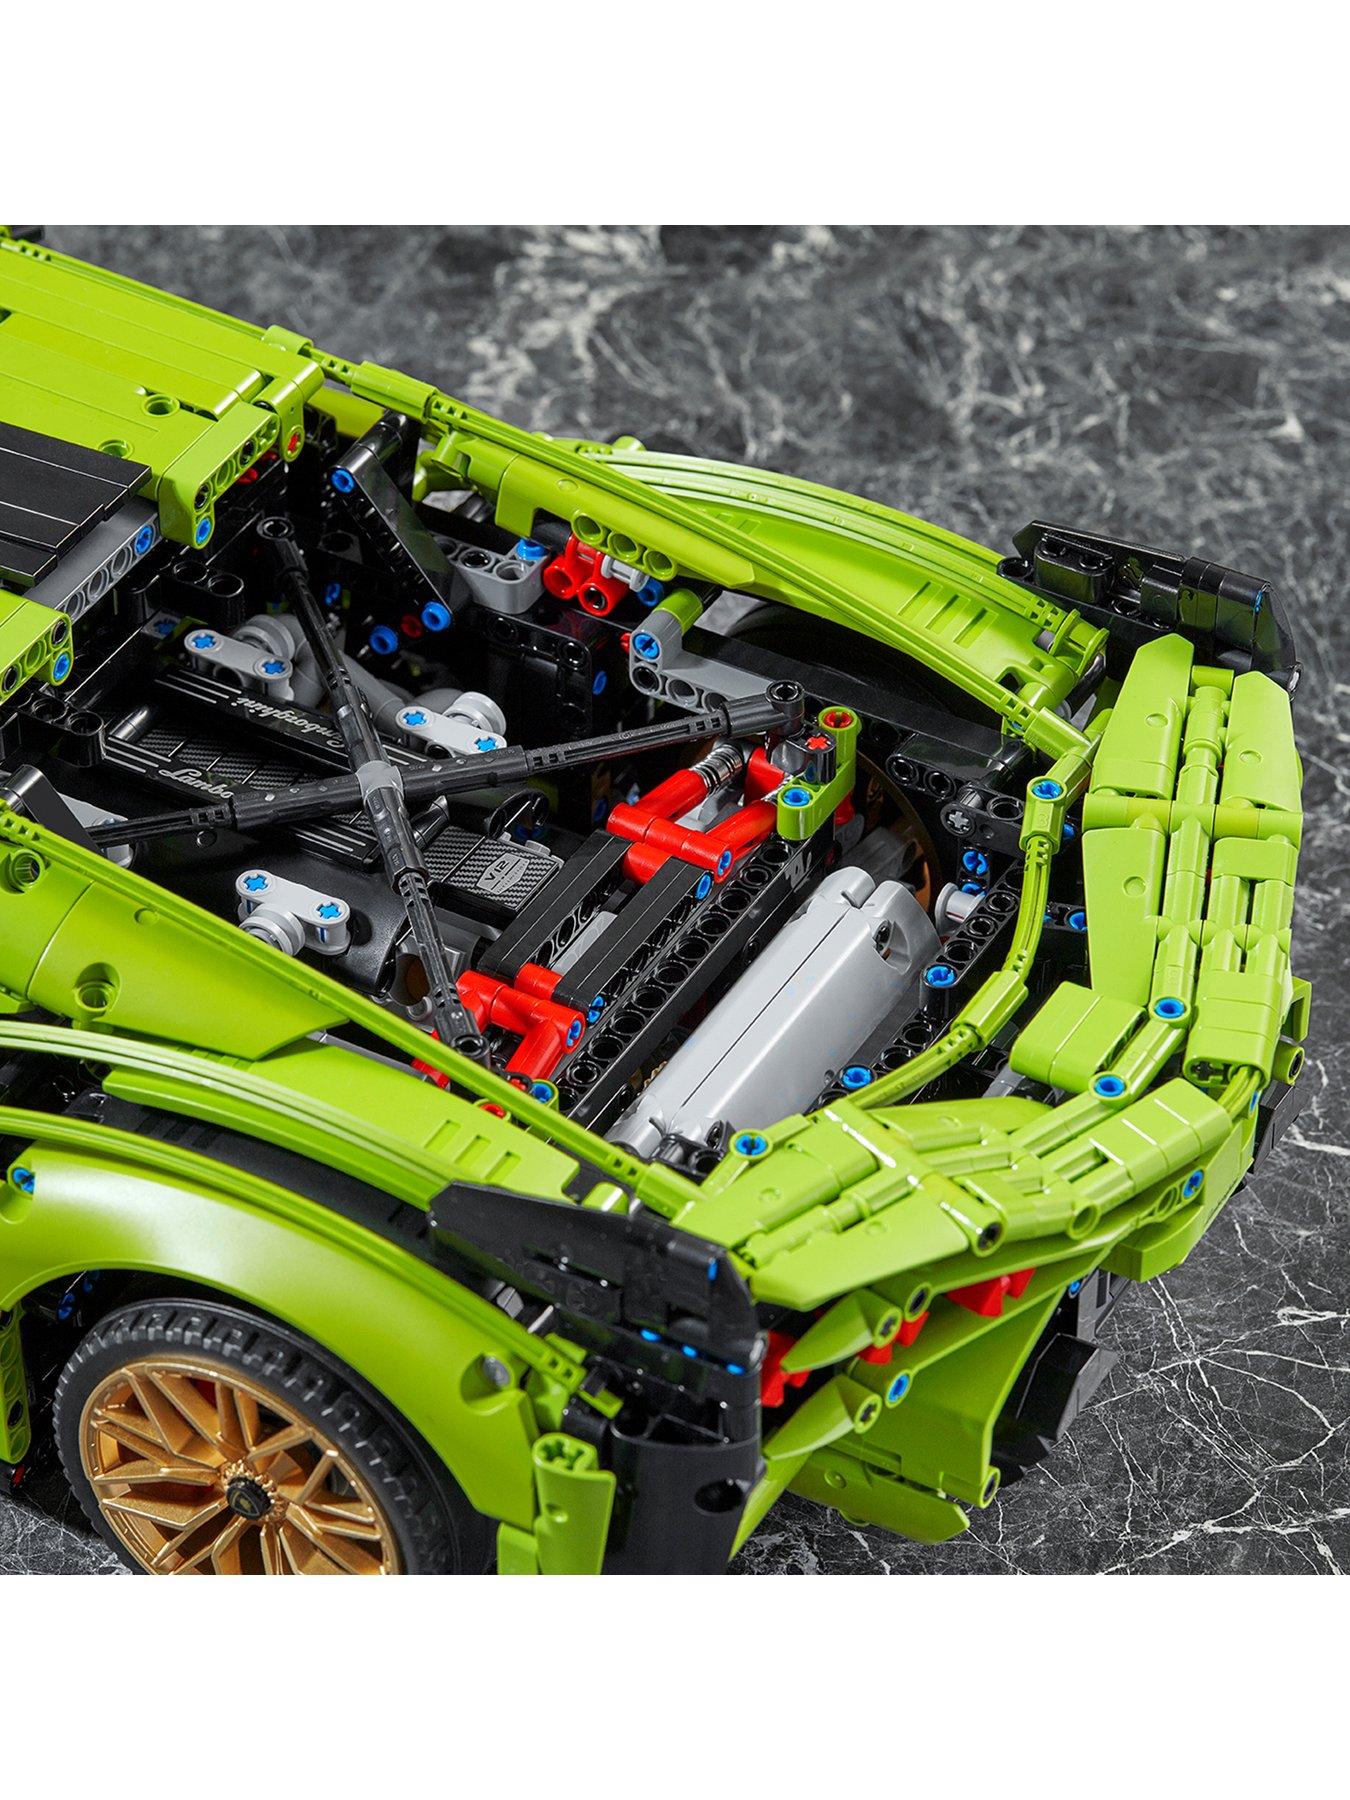 LEGO Technic Lamborghini Sián FKP 37 gets more than $70 off at